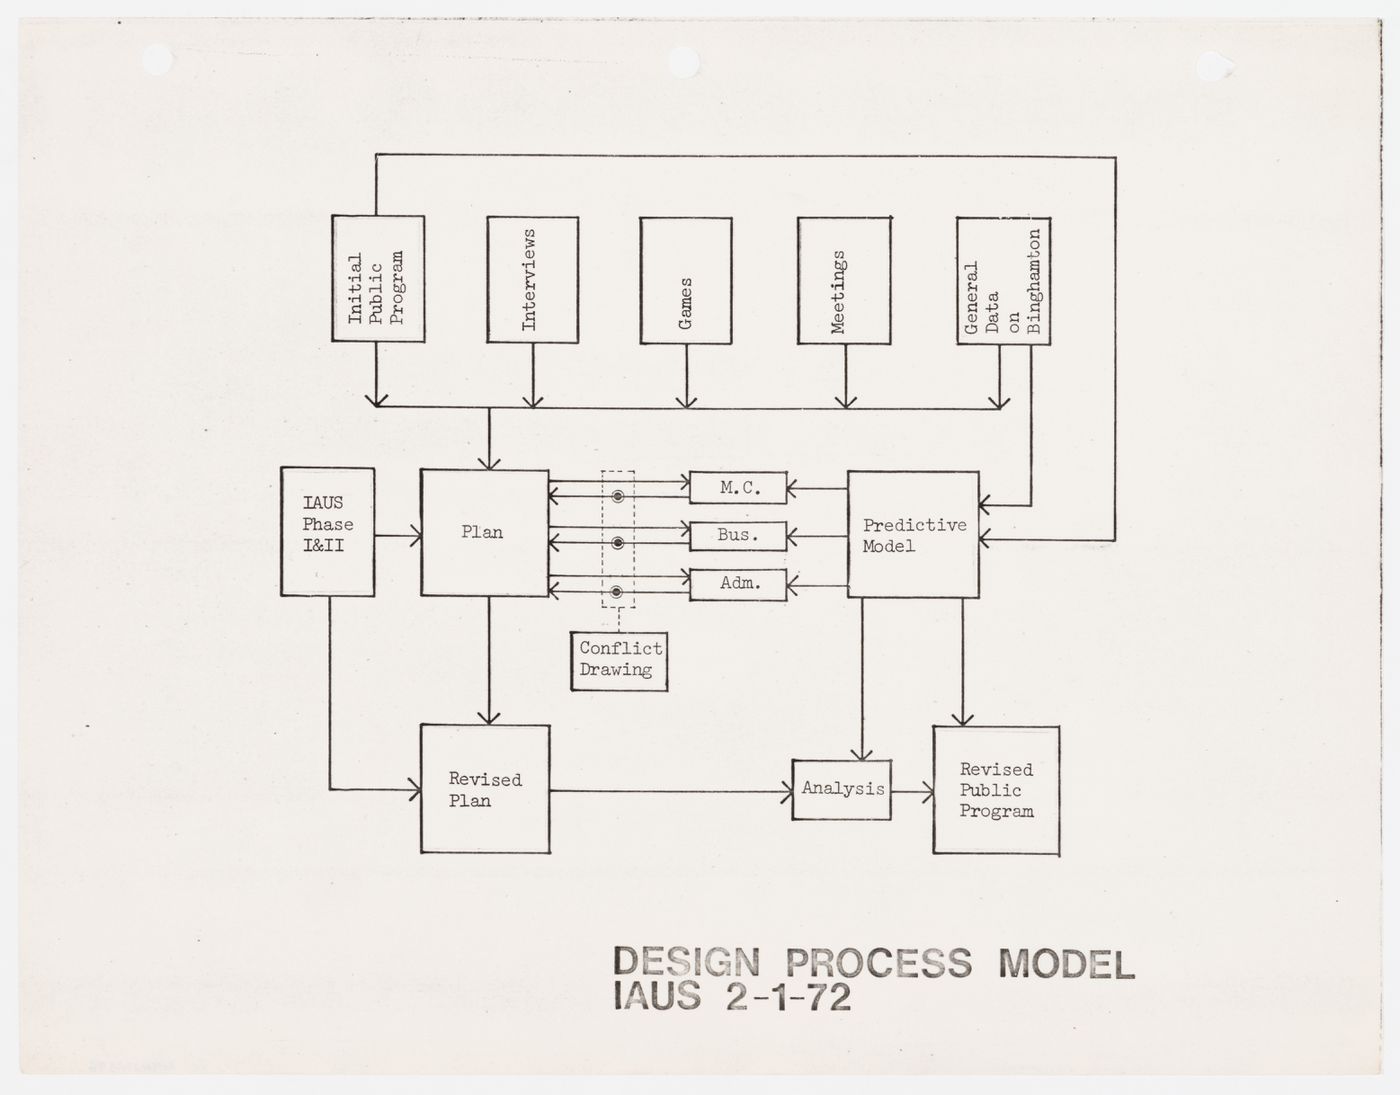 Diagram of design process model